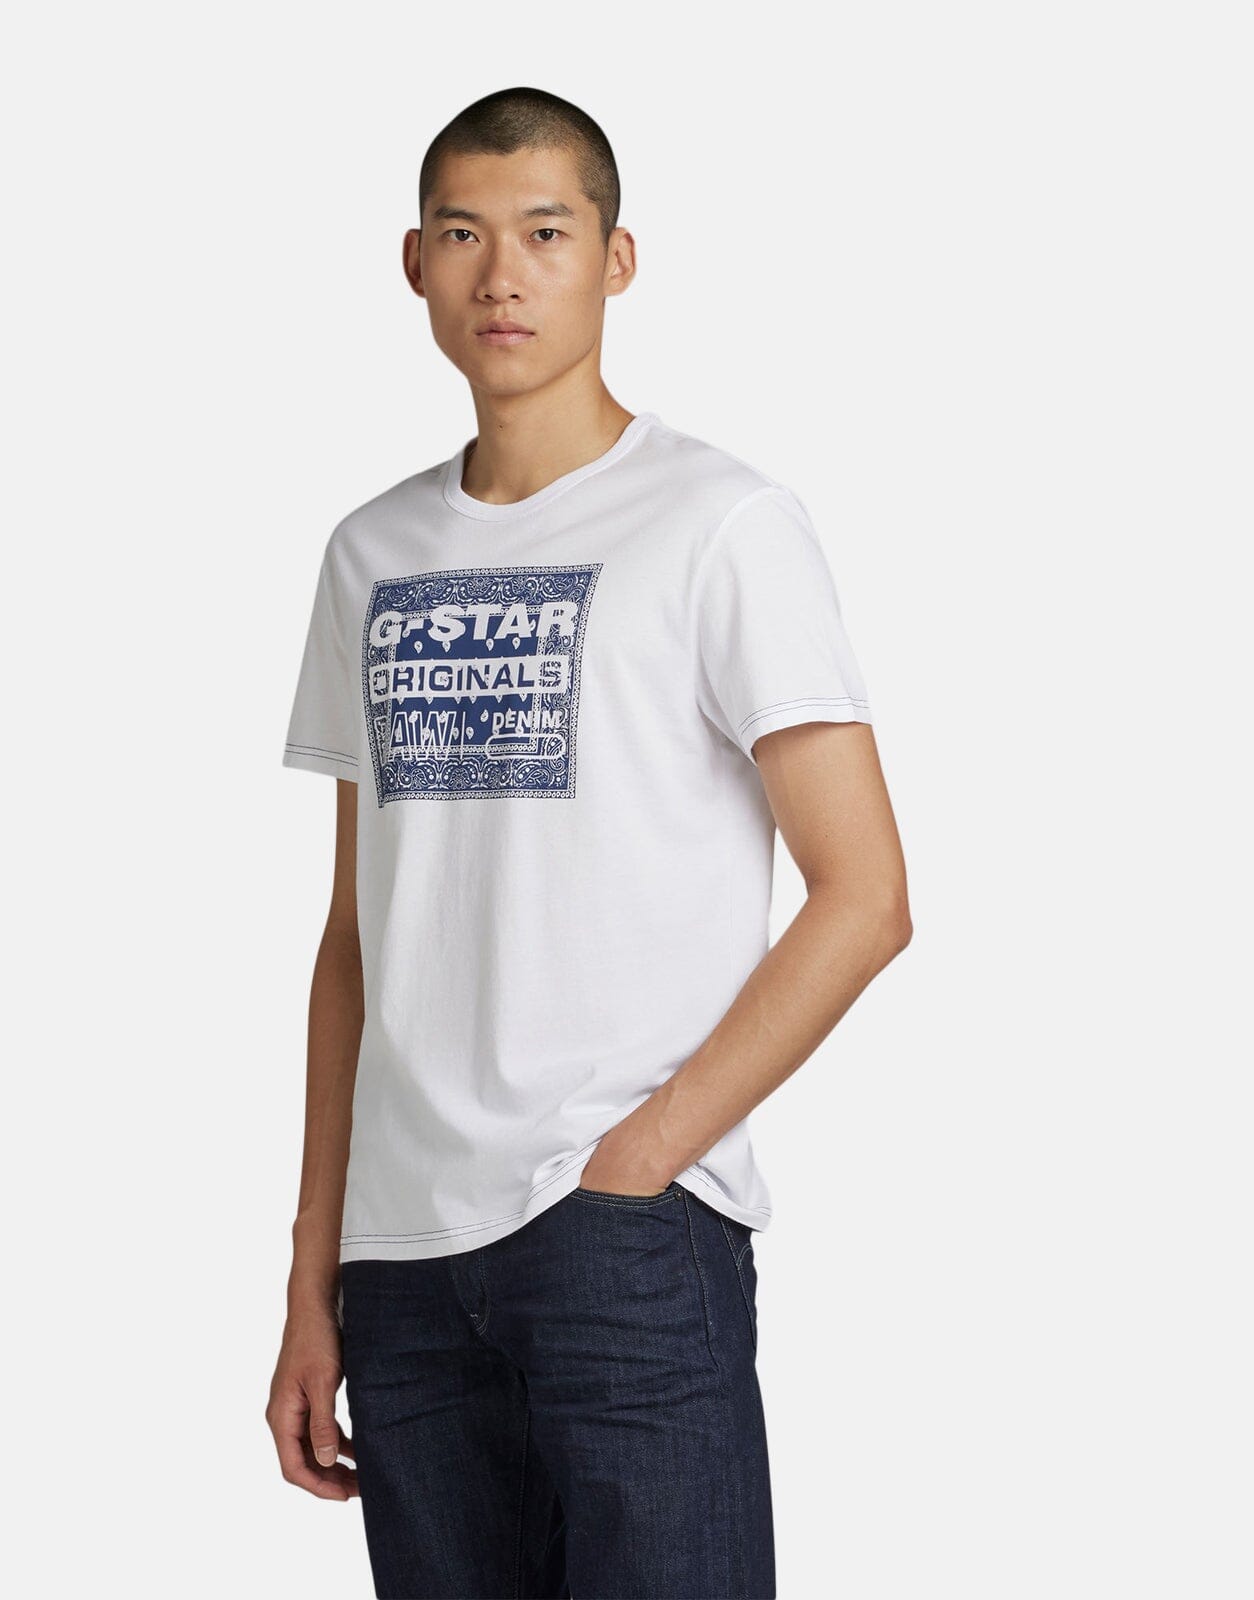 Bandana White T-Shirt | Subwear